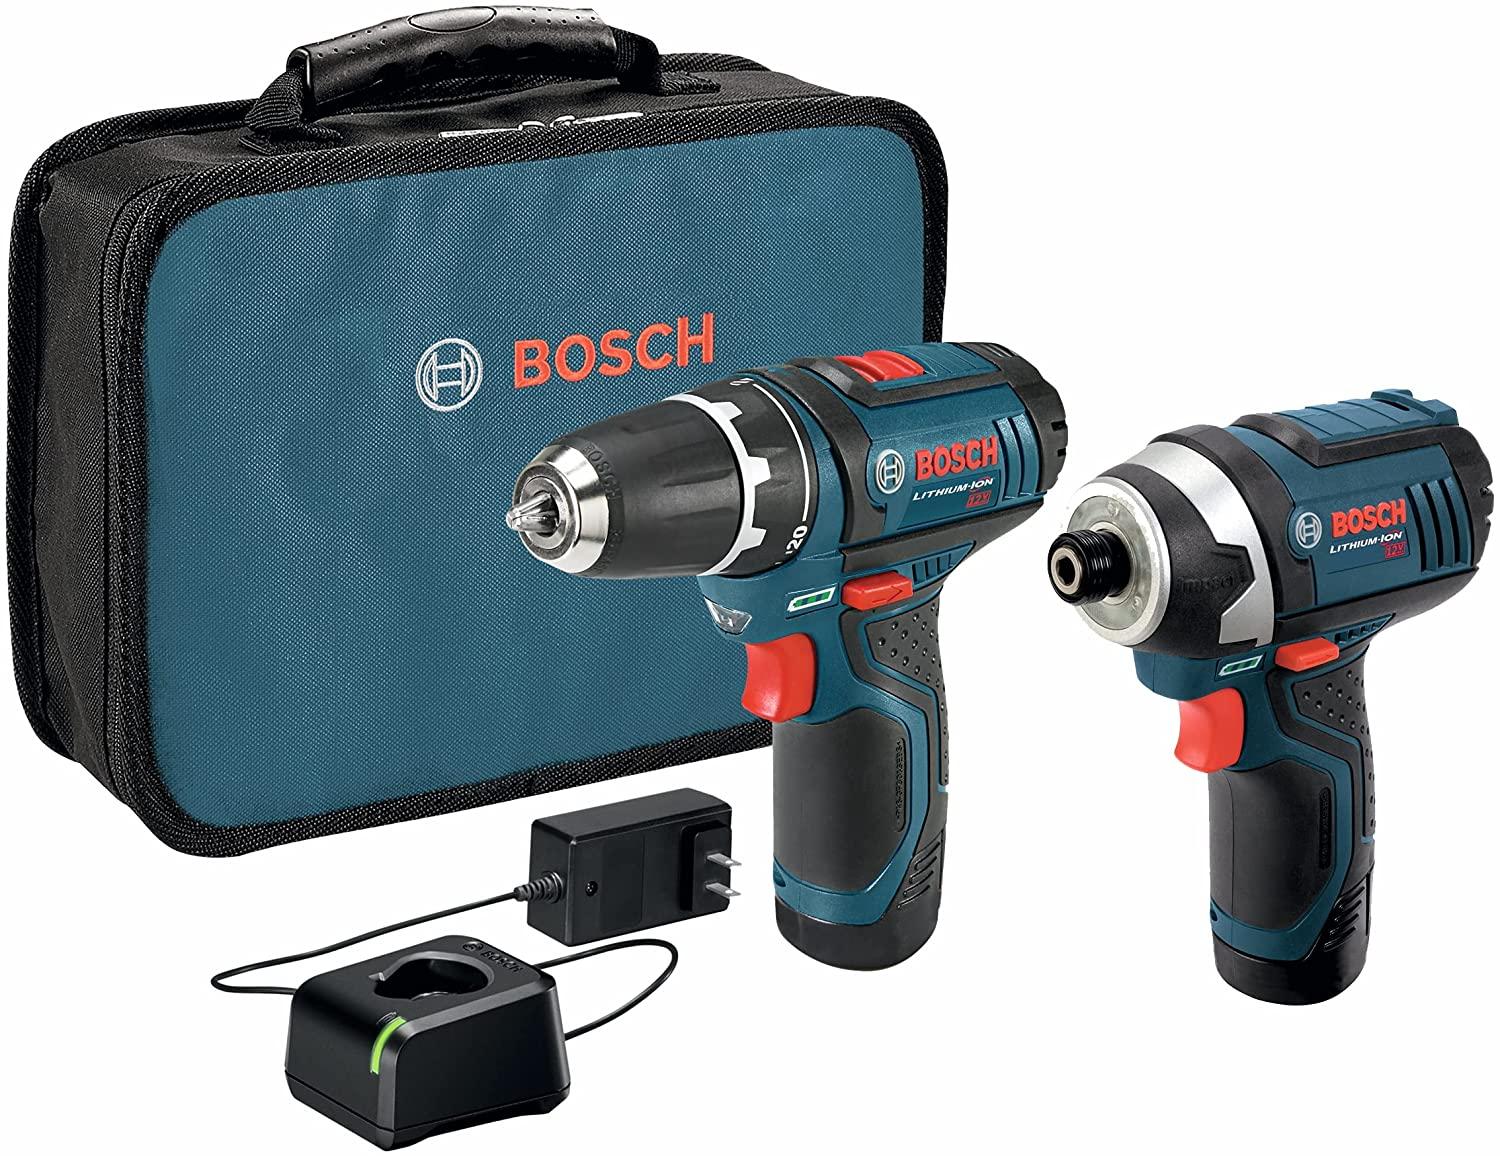 Bosch Power Tools Combo Kit 12V Cordless Tool Set for $99 Shipped